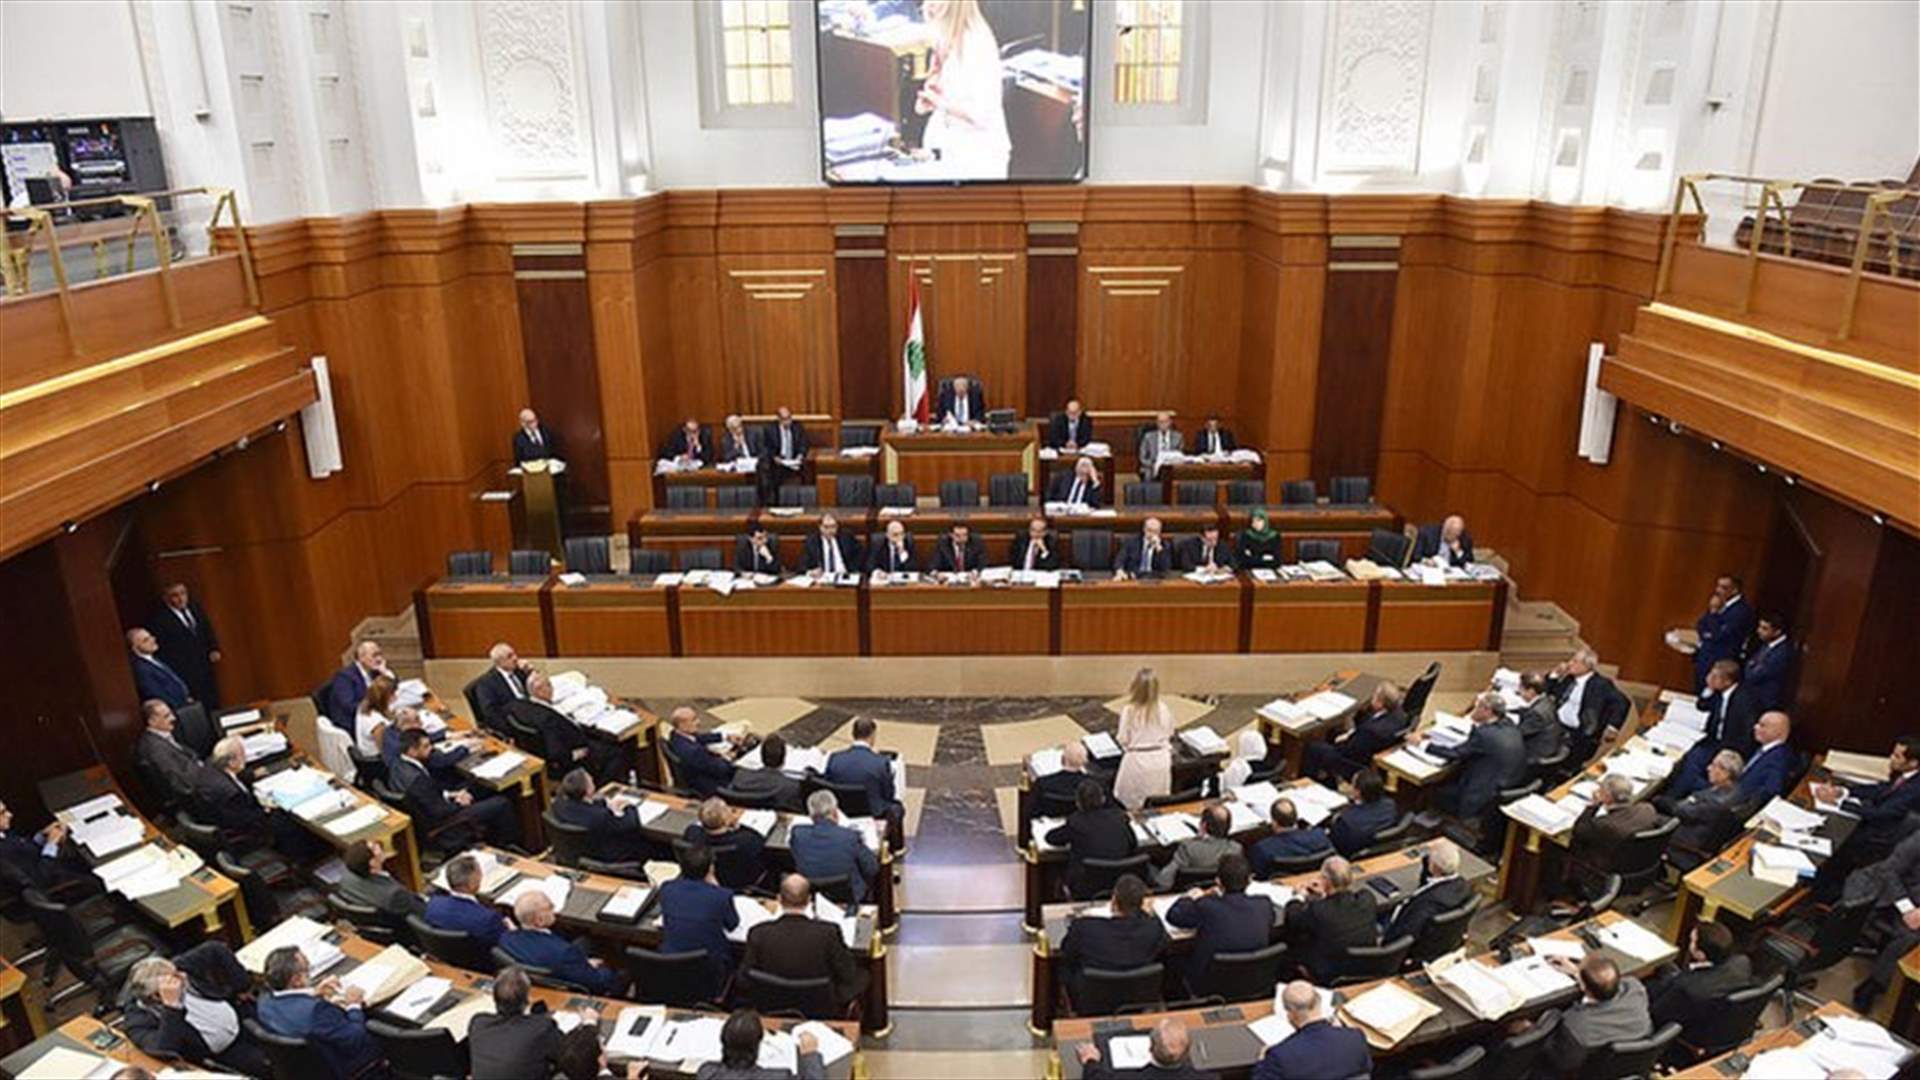 Legislative session adjourned after withdrawal of Lebanese Forces deputies